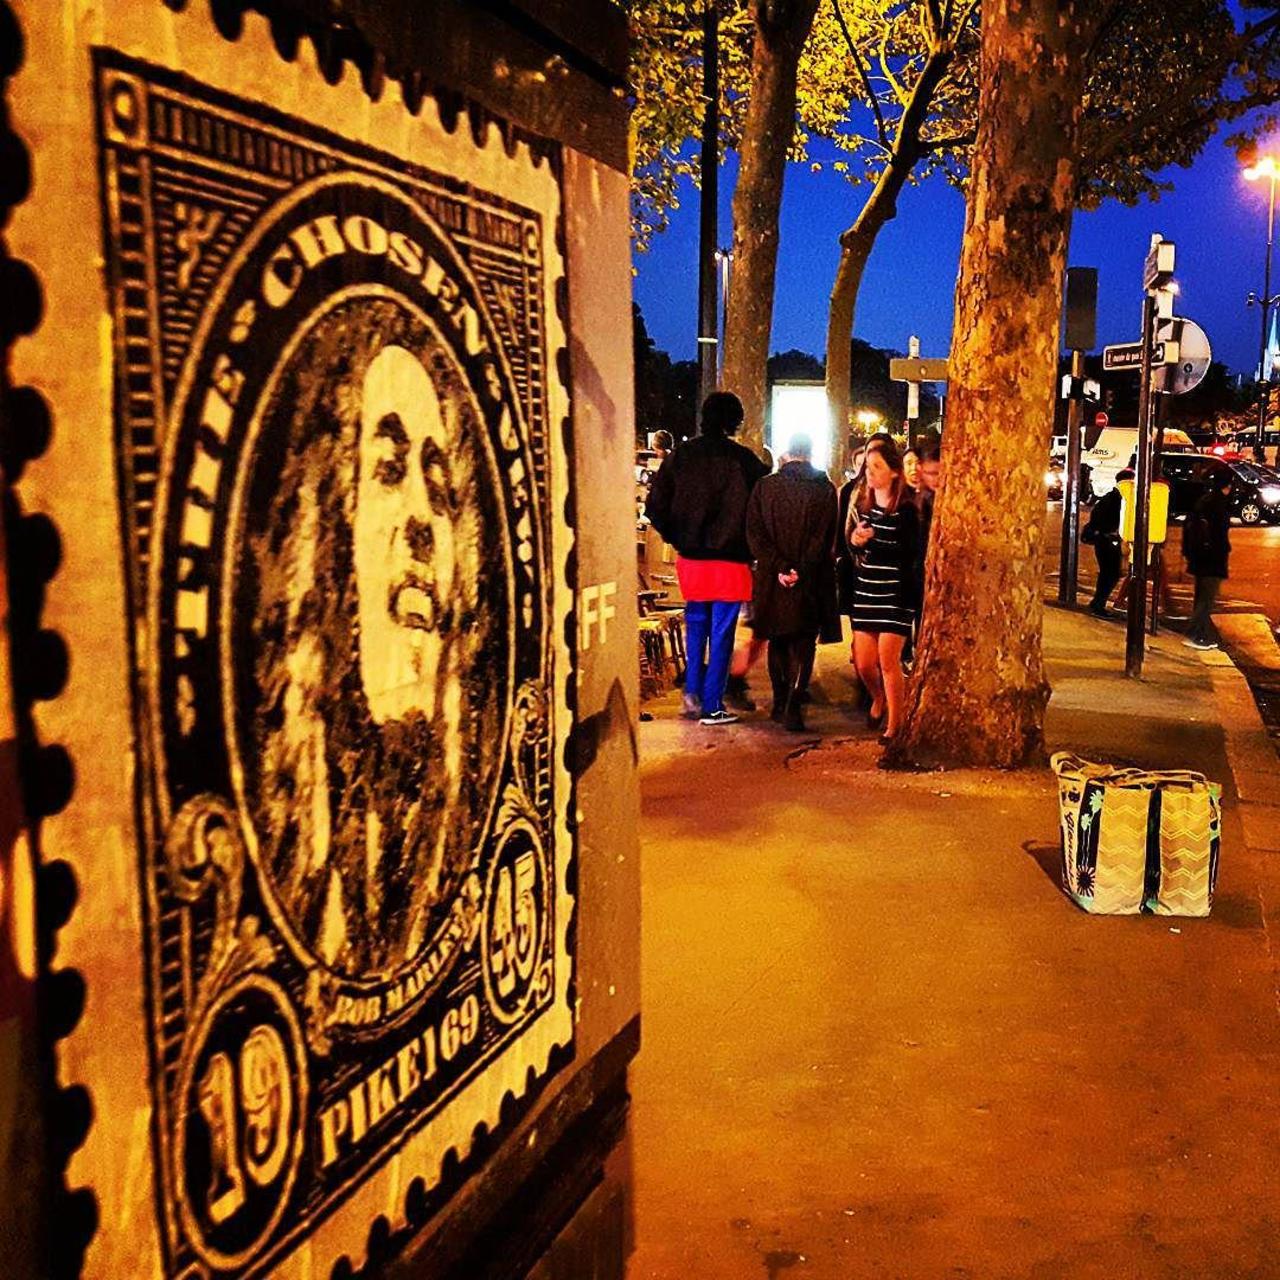 #Paris #graffiti photo by @the169 http://ift.tt/1OdaNAb #StreetArt http://t.co/ZbapknrLG0